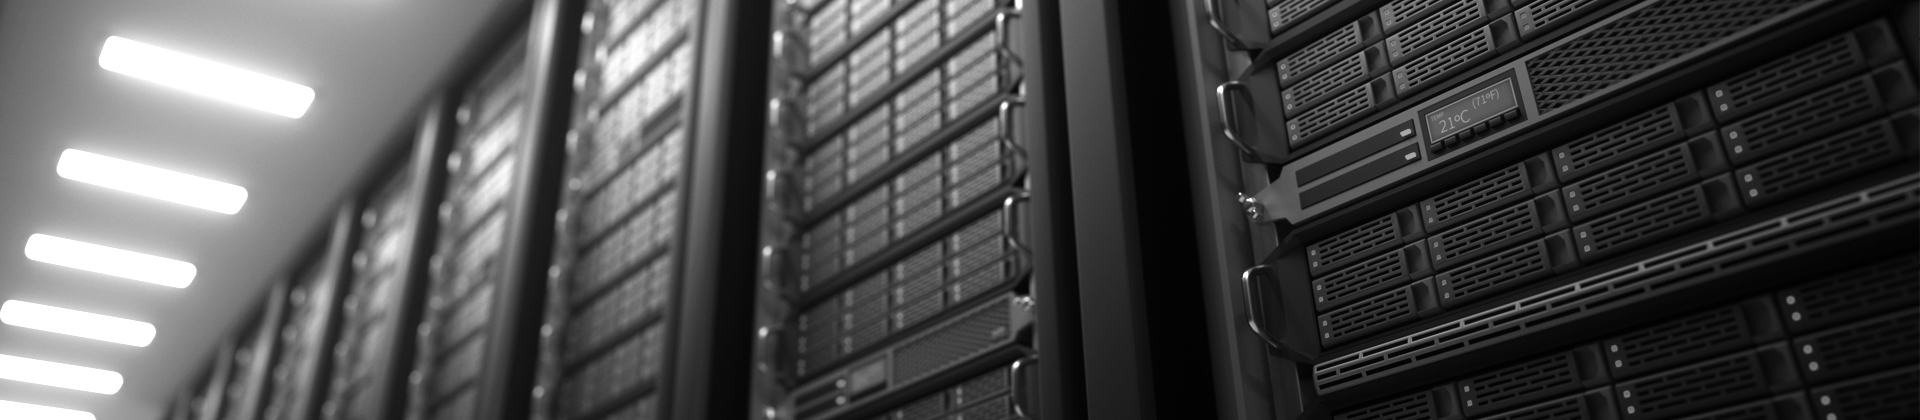 Online Storage Secure Online File Storage in Permissions-Based Folders